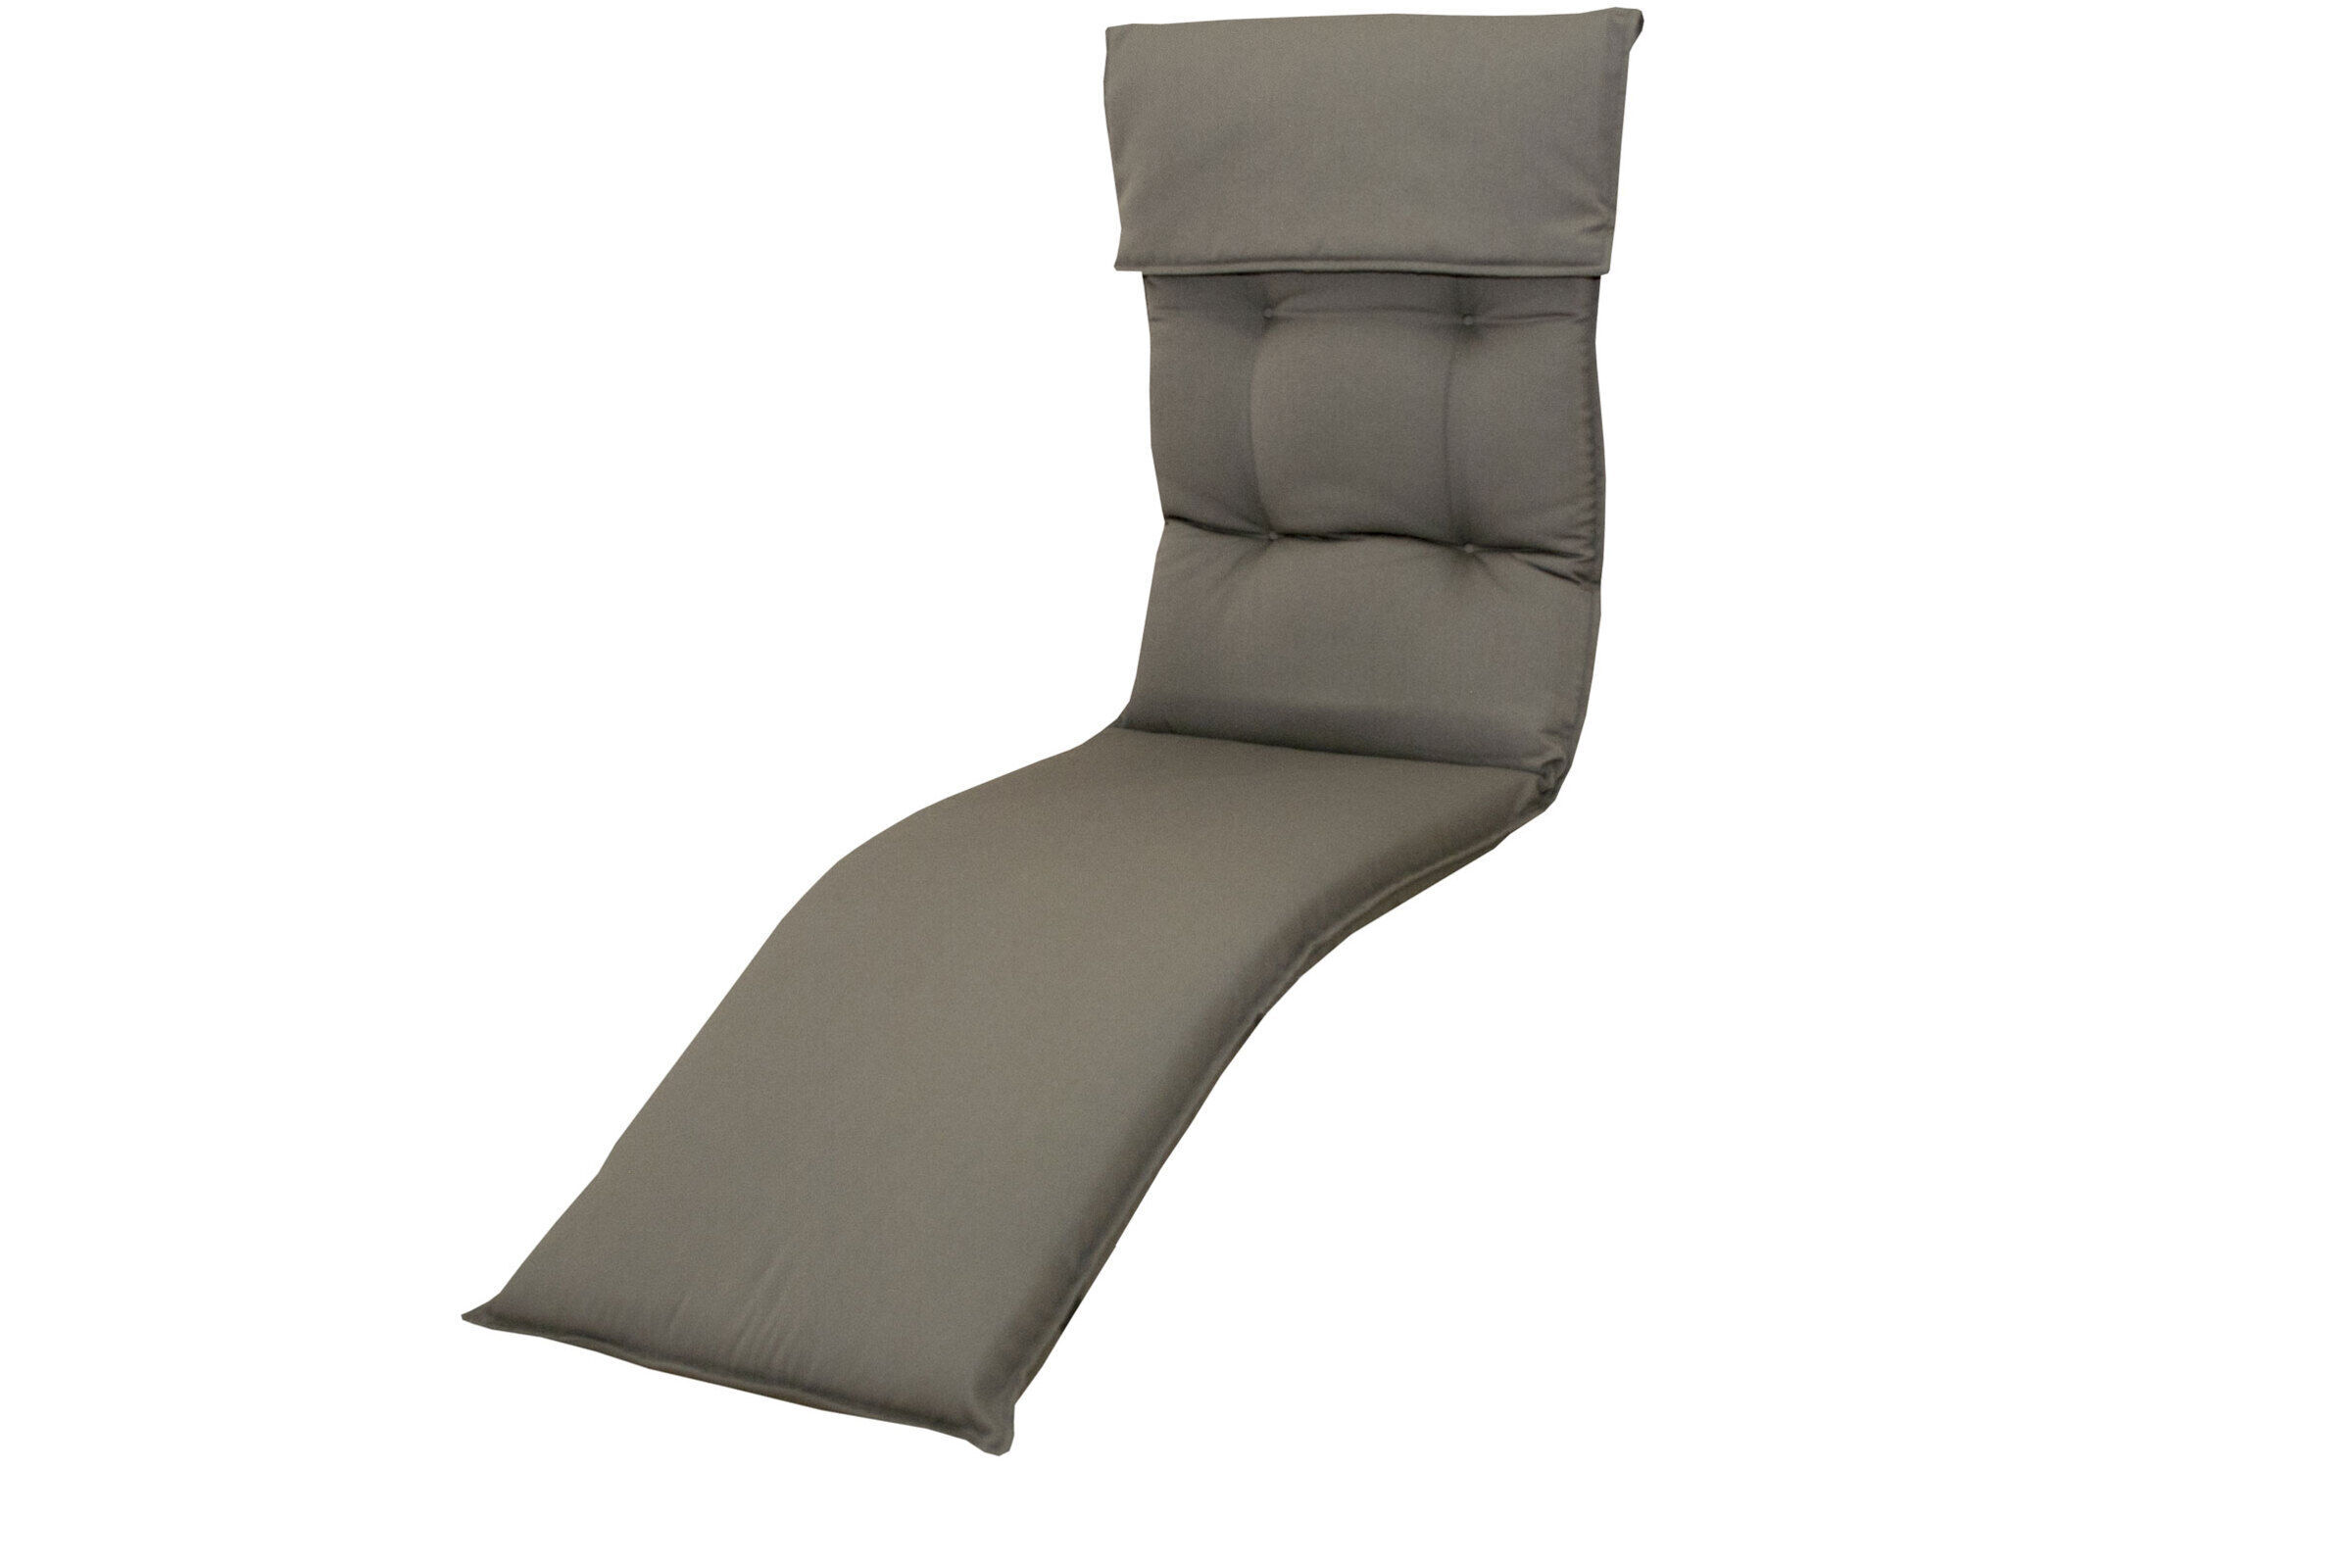 DOPPLER Relax Style Relaxsesselauflage, grau, Dralon, 175 x 45,5 x 7 cm, inklusive Befestigungsbänder